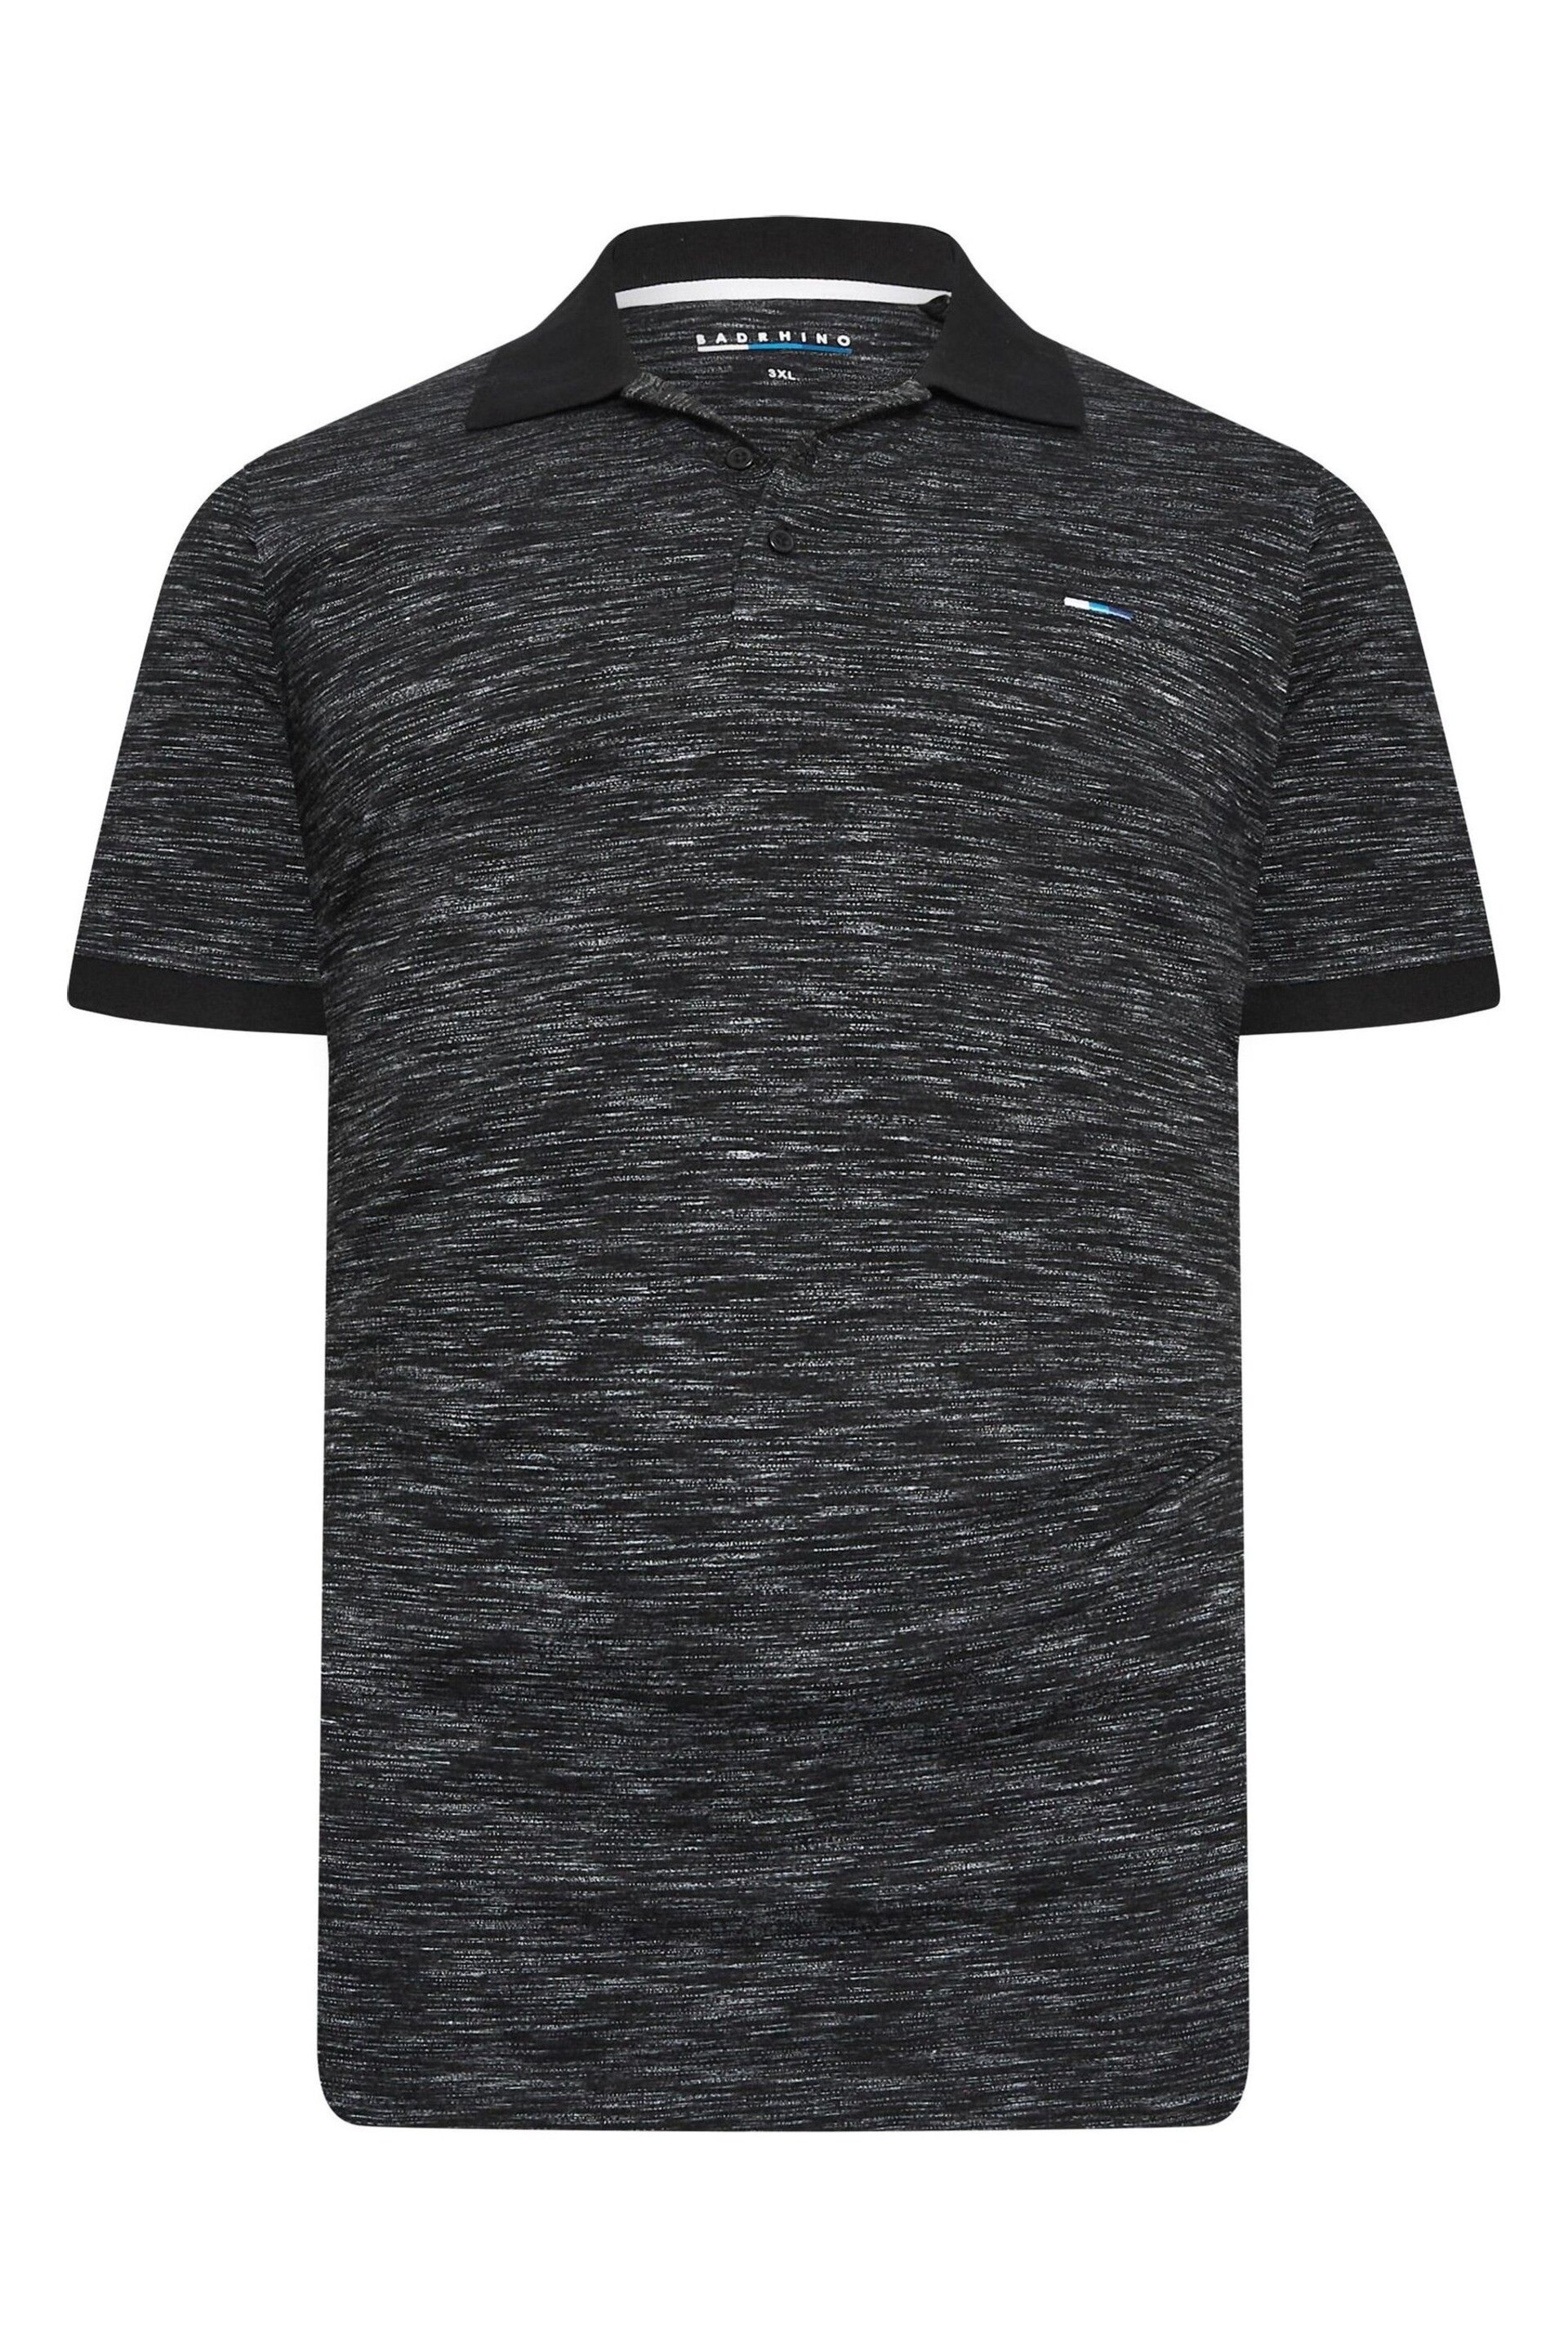 BadRhino Big & Tall Black Injected Jersey Polo Shirt - Image 2 of 3